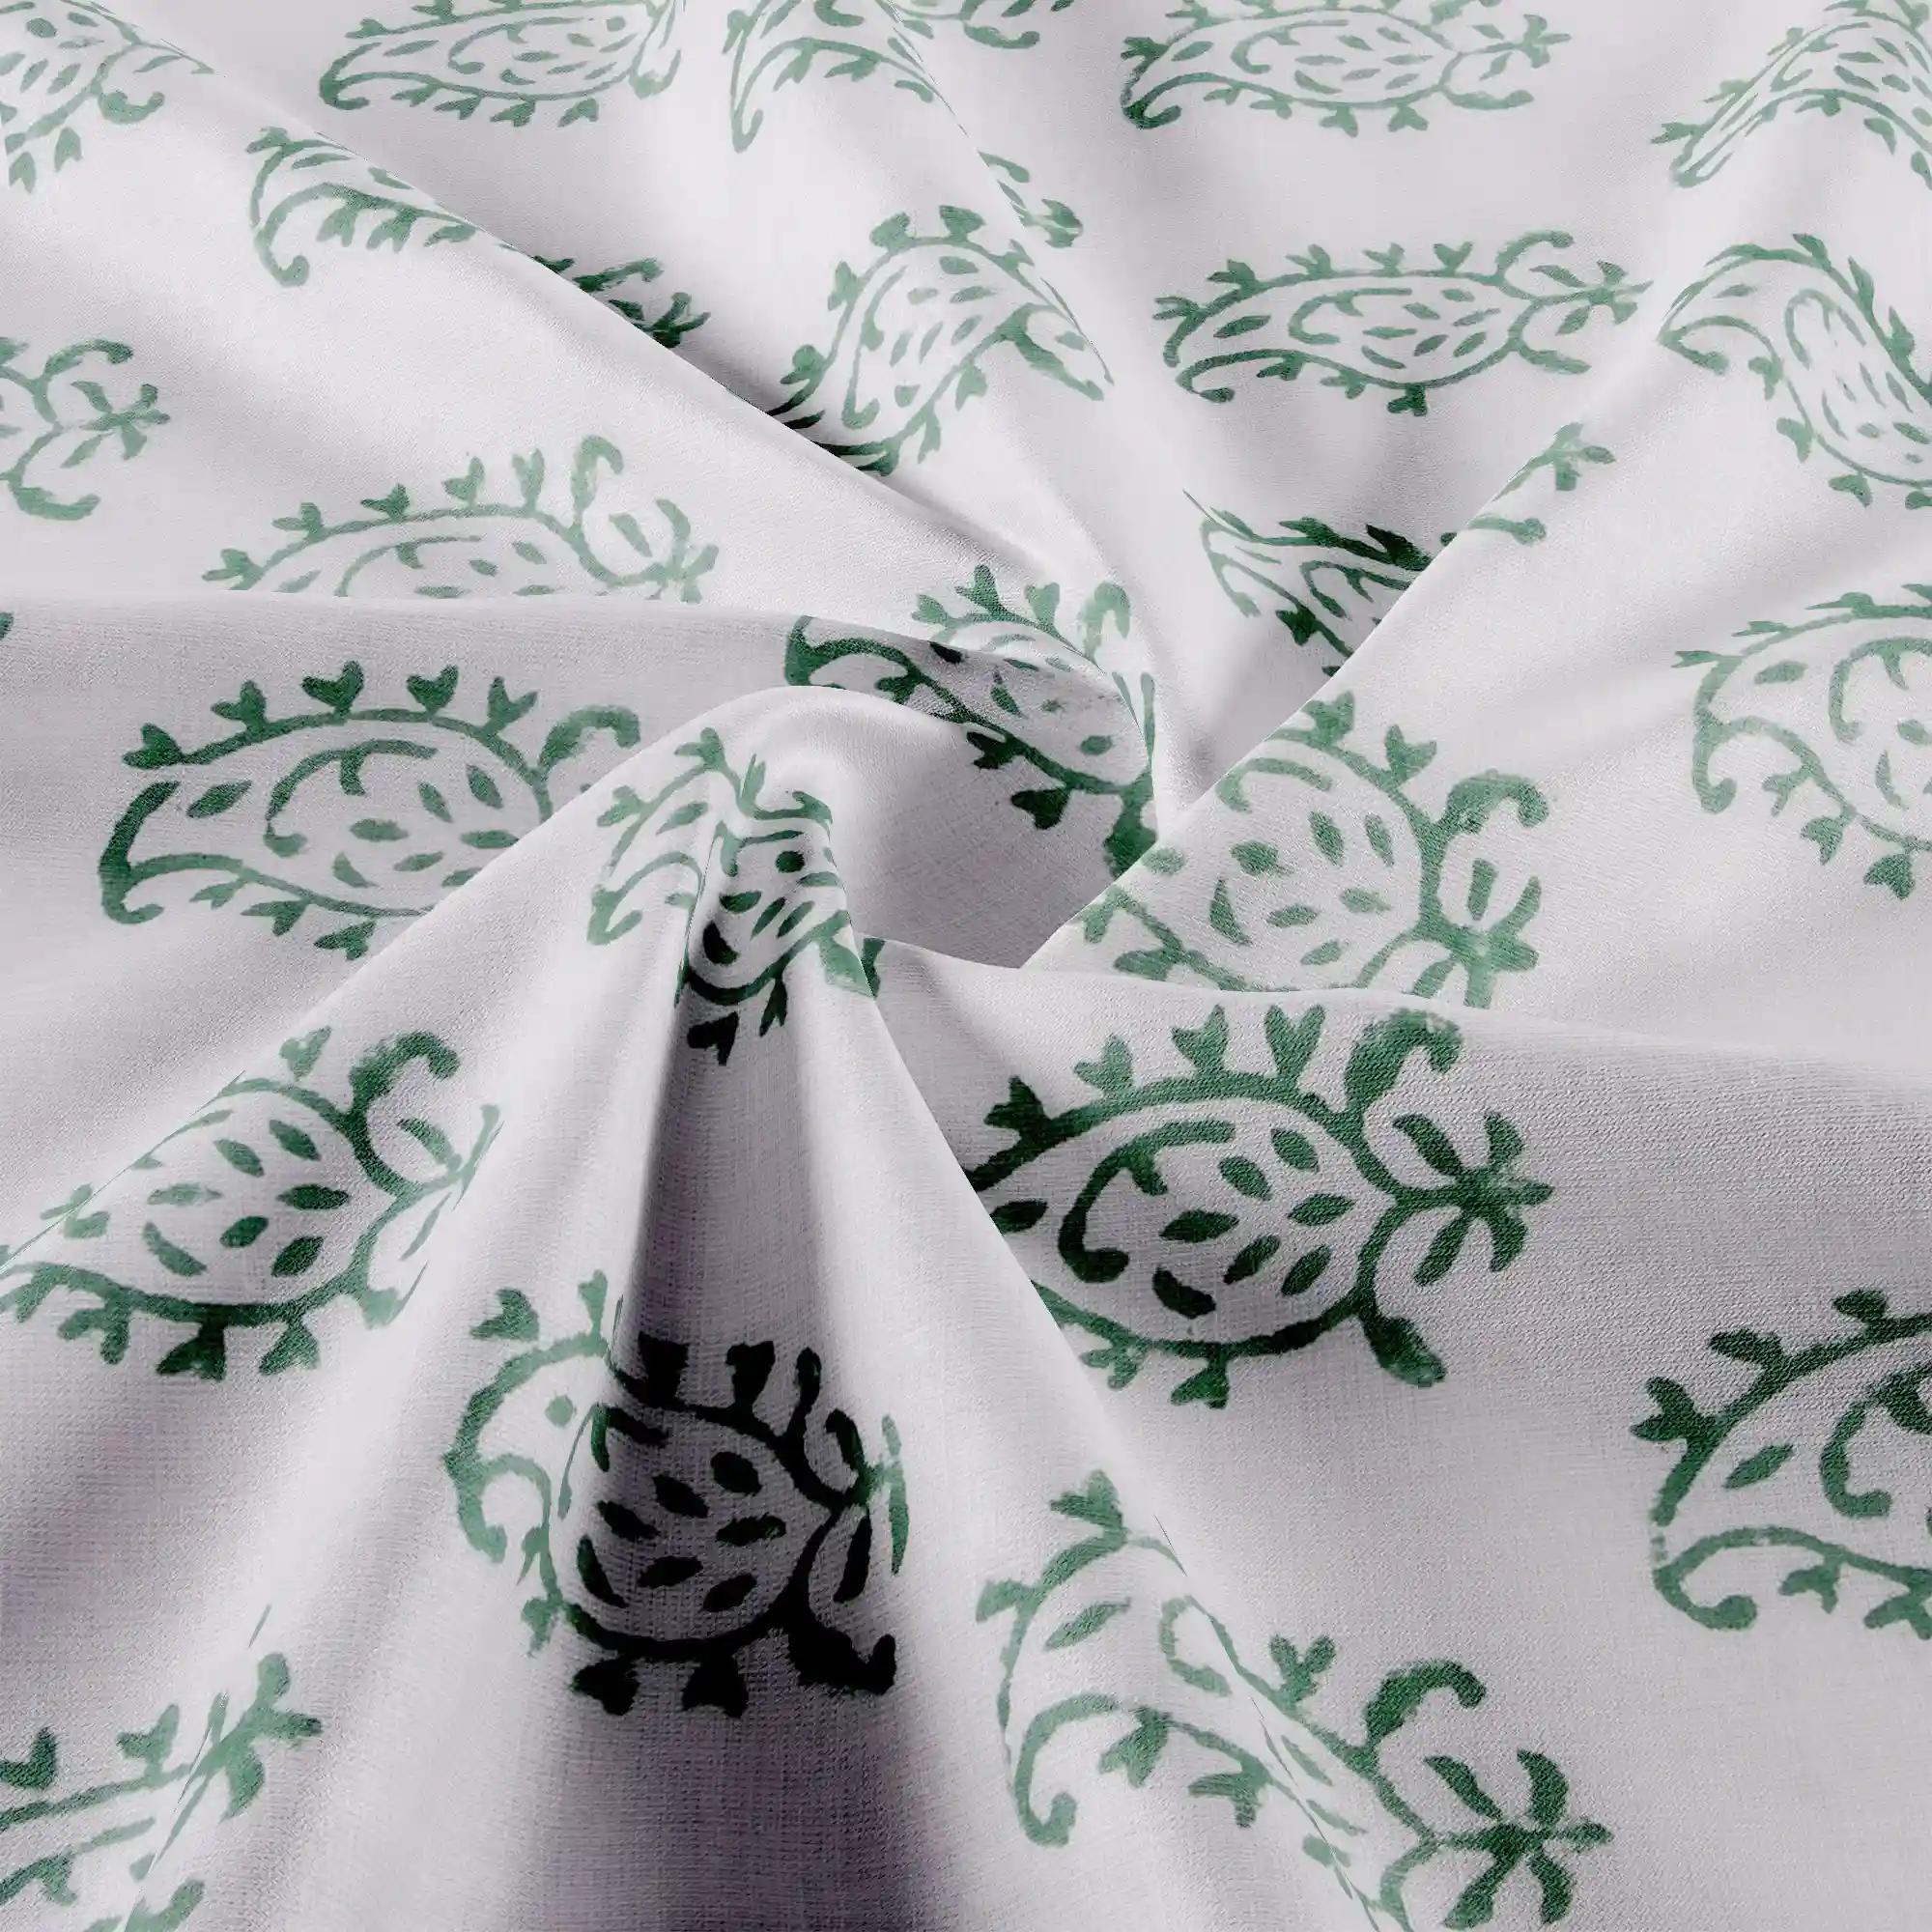 Jaipur Dohar Hand Block Printed Single Bed Cotton Dohar - Mustard Green Paisley